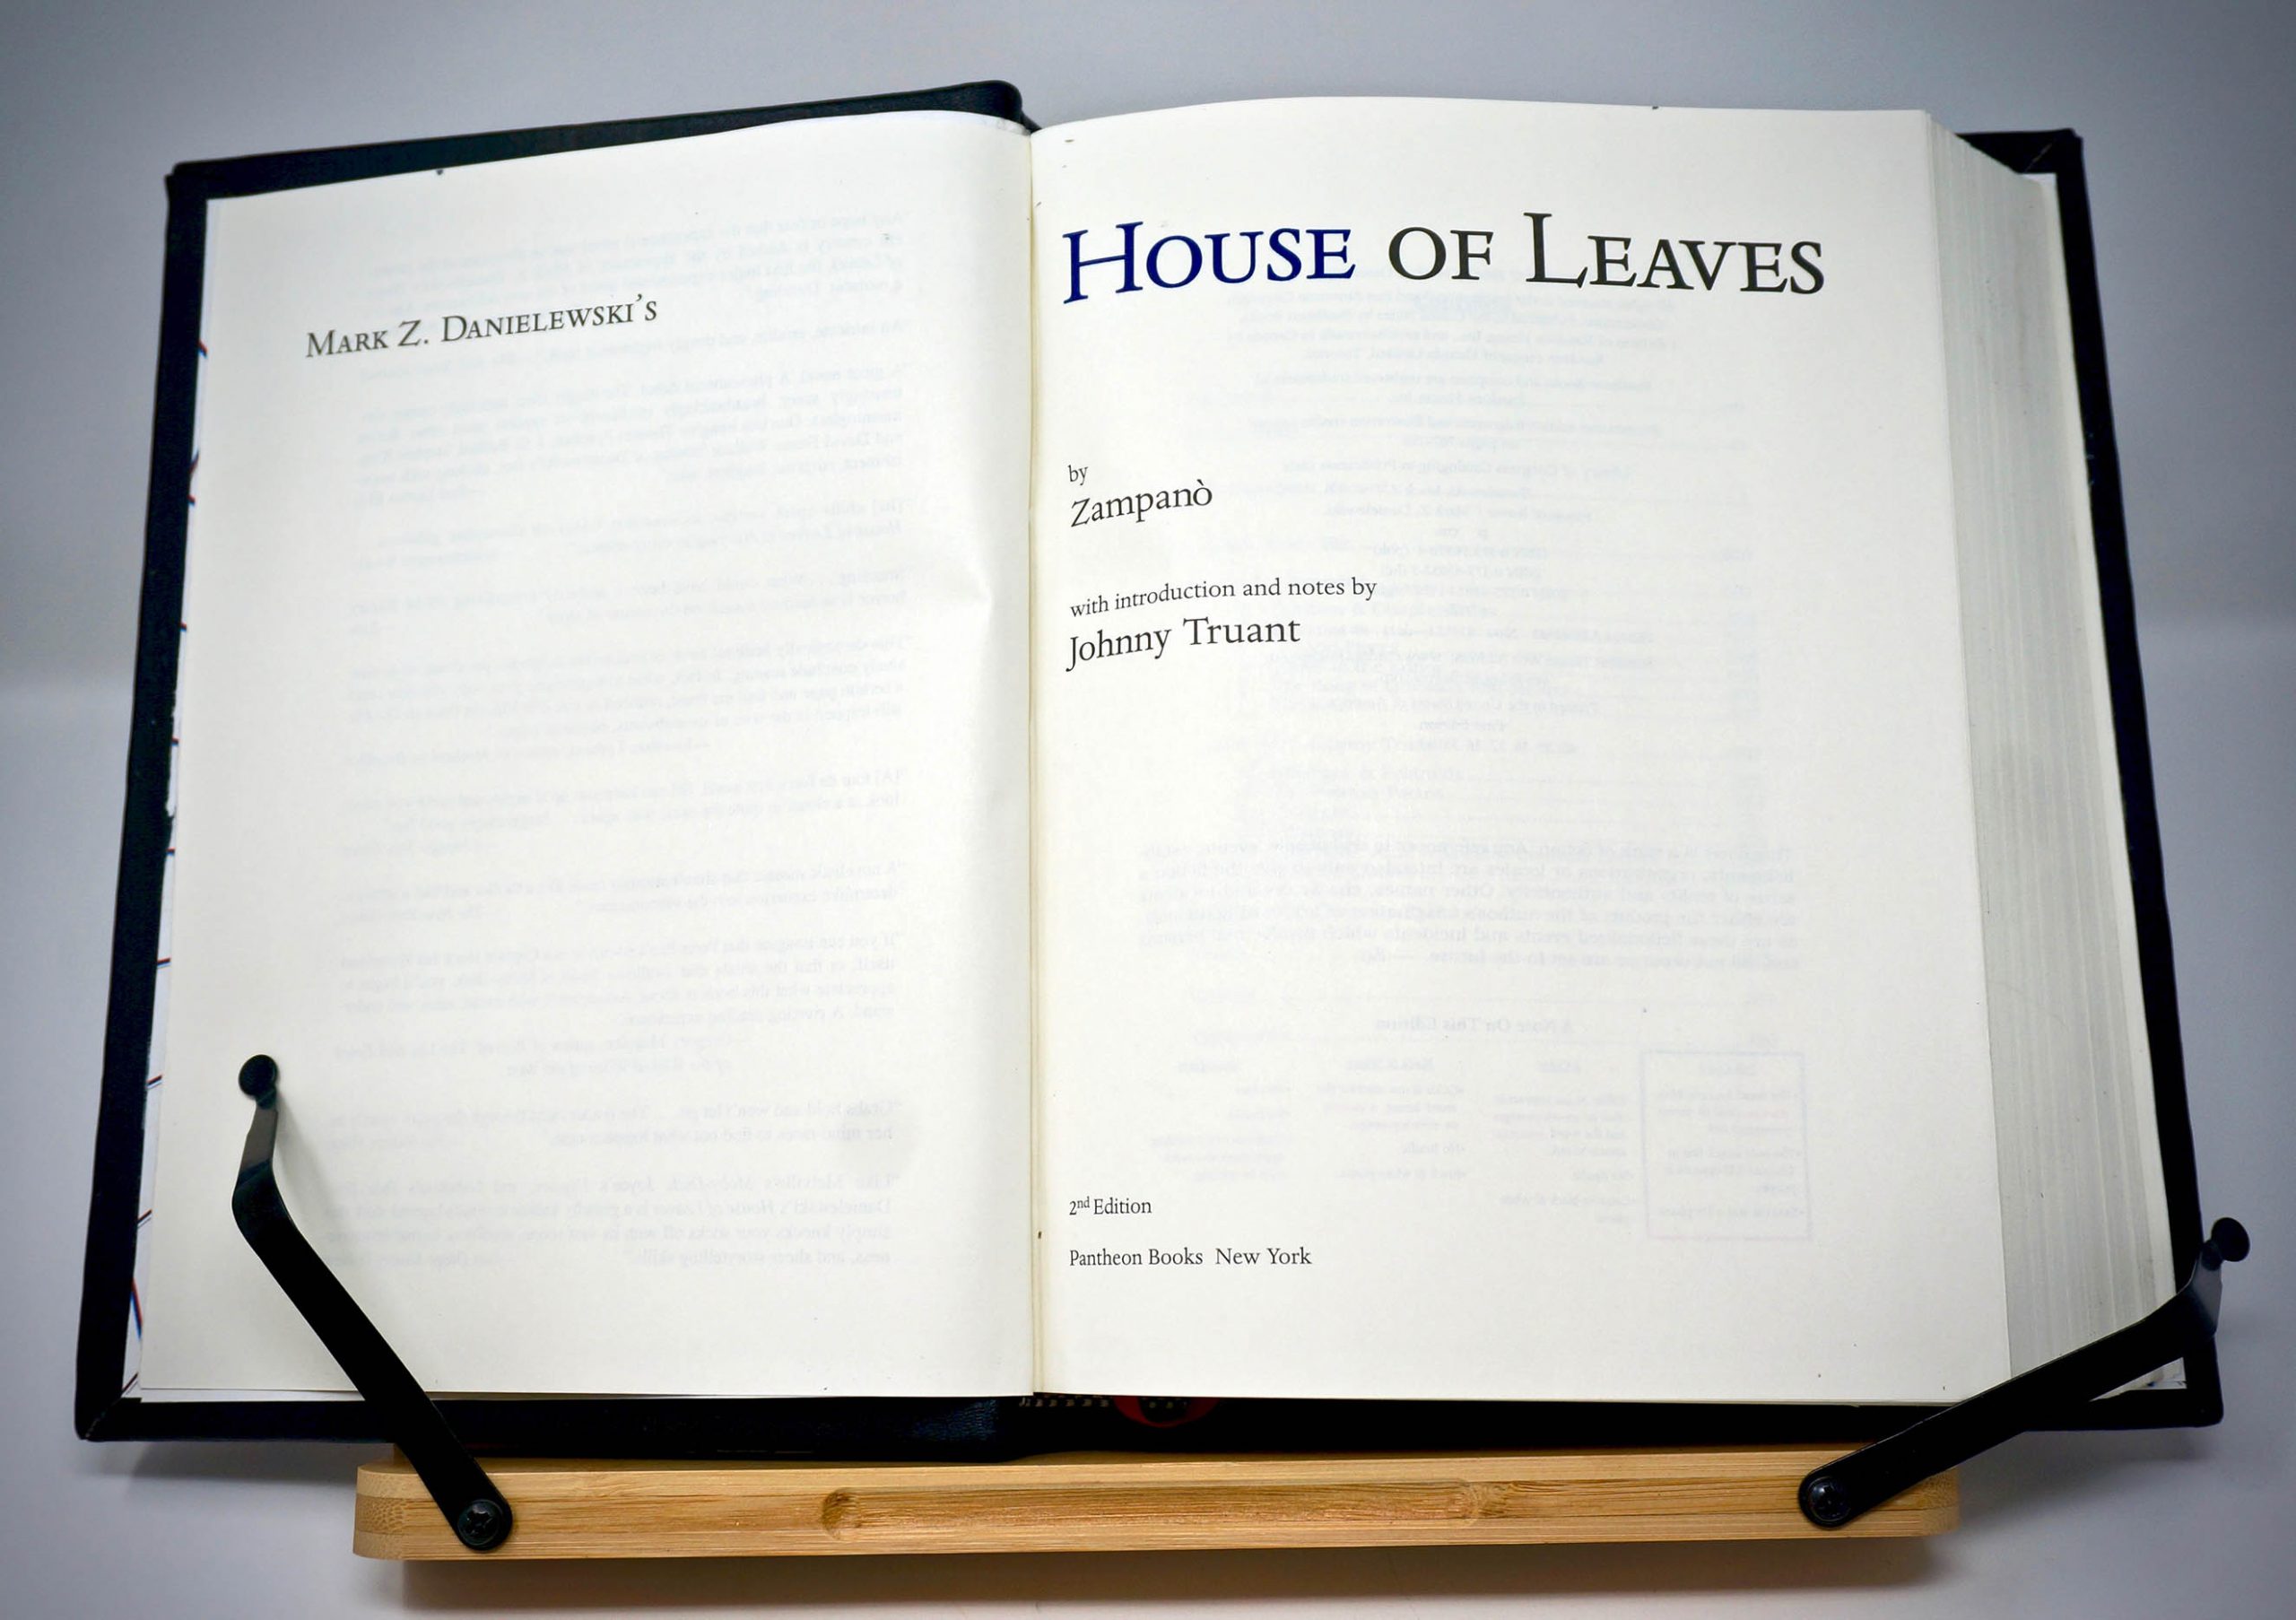 House of Leaves
Custom Leather Bound Book
Boston Harbor Bookbindery
https://bostonharborbooks.com/